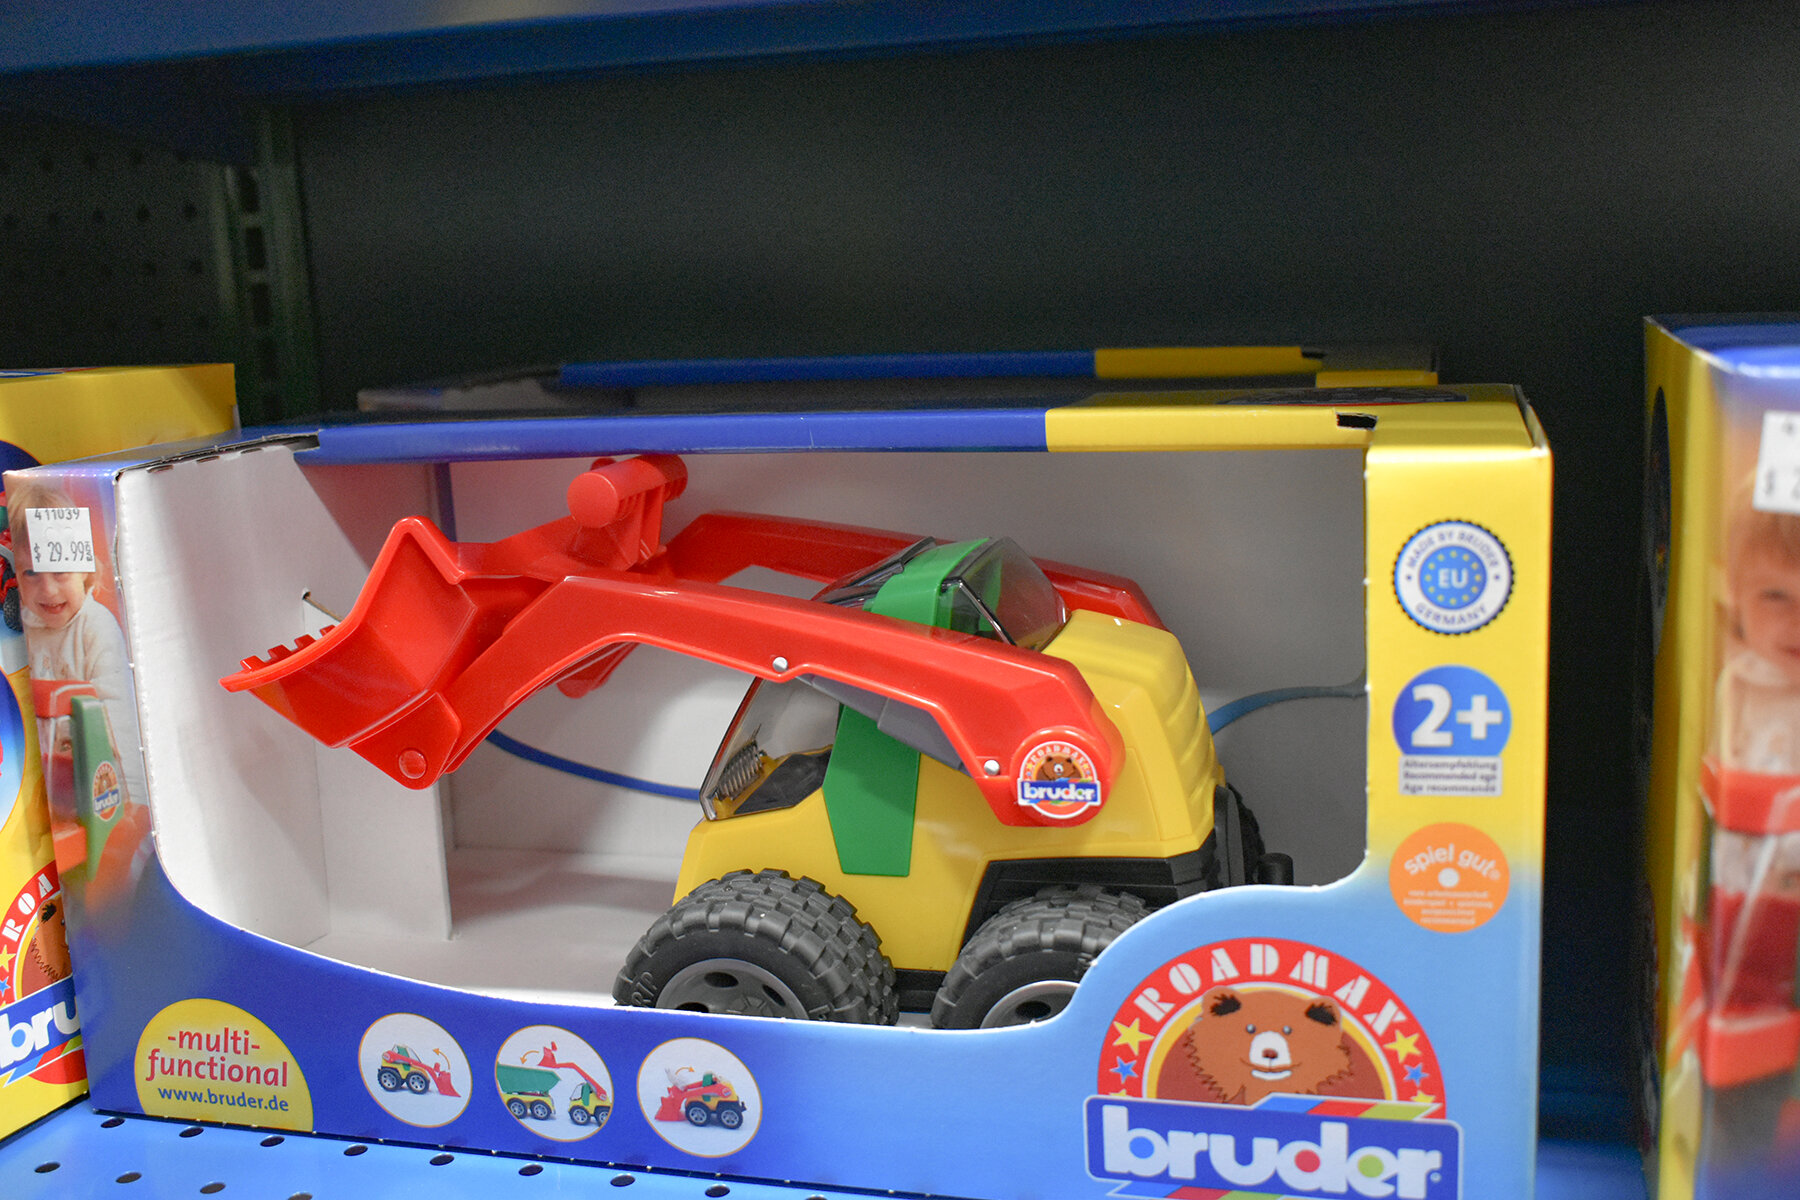 Phillips Toy Mart Bruder toddler toy trucks.JPG